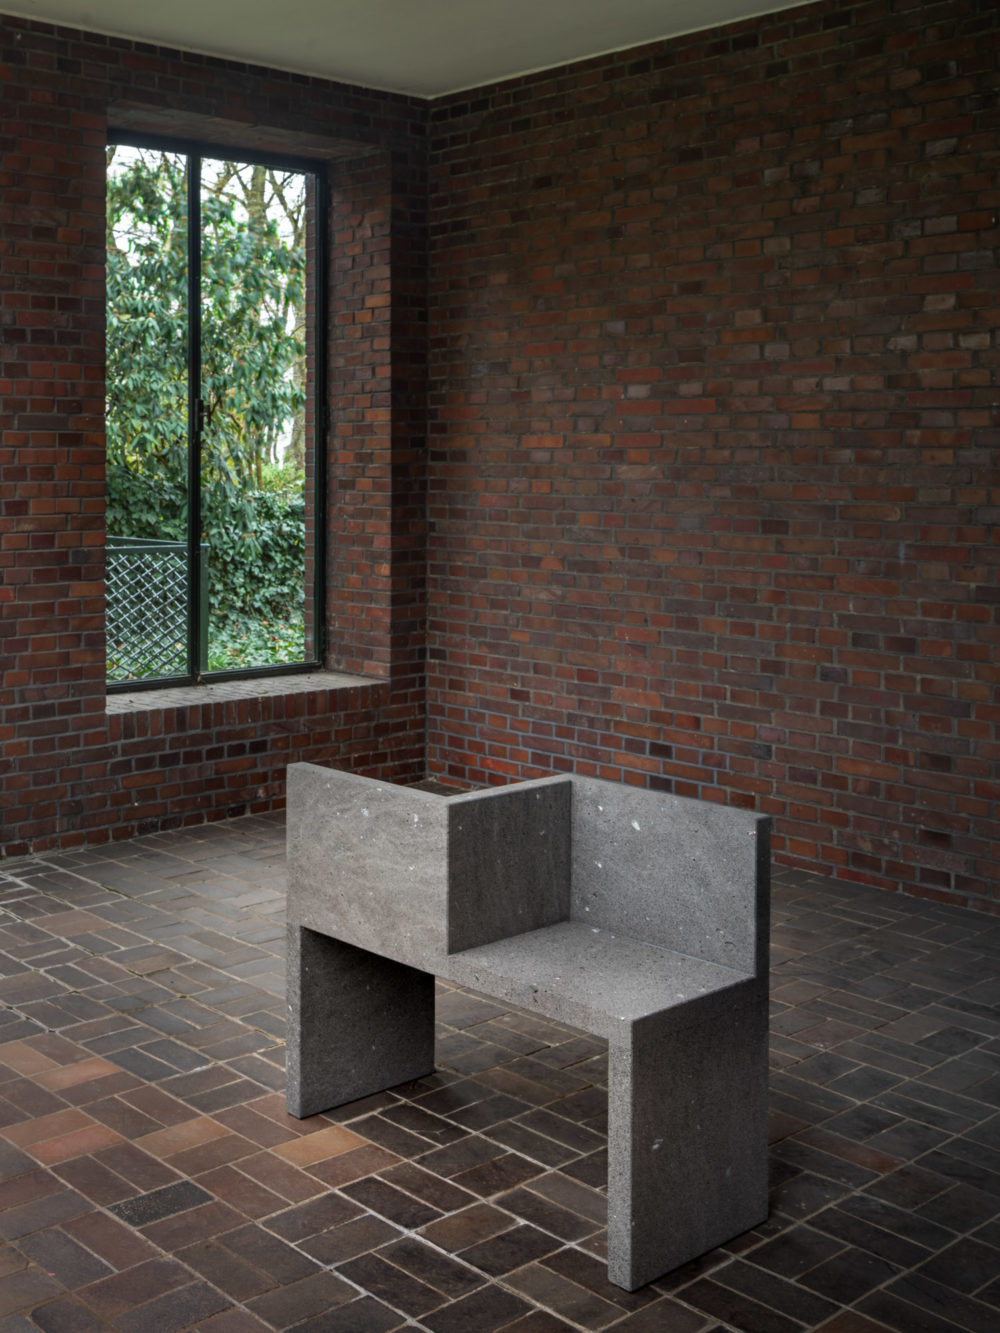 Haus Lange, Gartenseite, Sitzbank von Wolfgang Hahn Foto: Dirk Rose / Kunstmuseen Krefeld